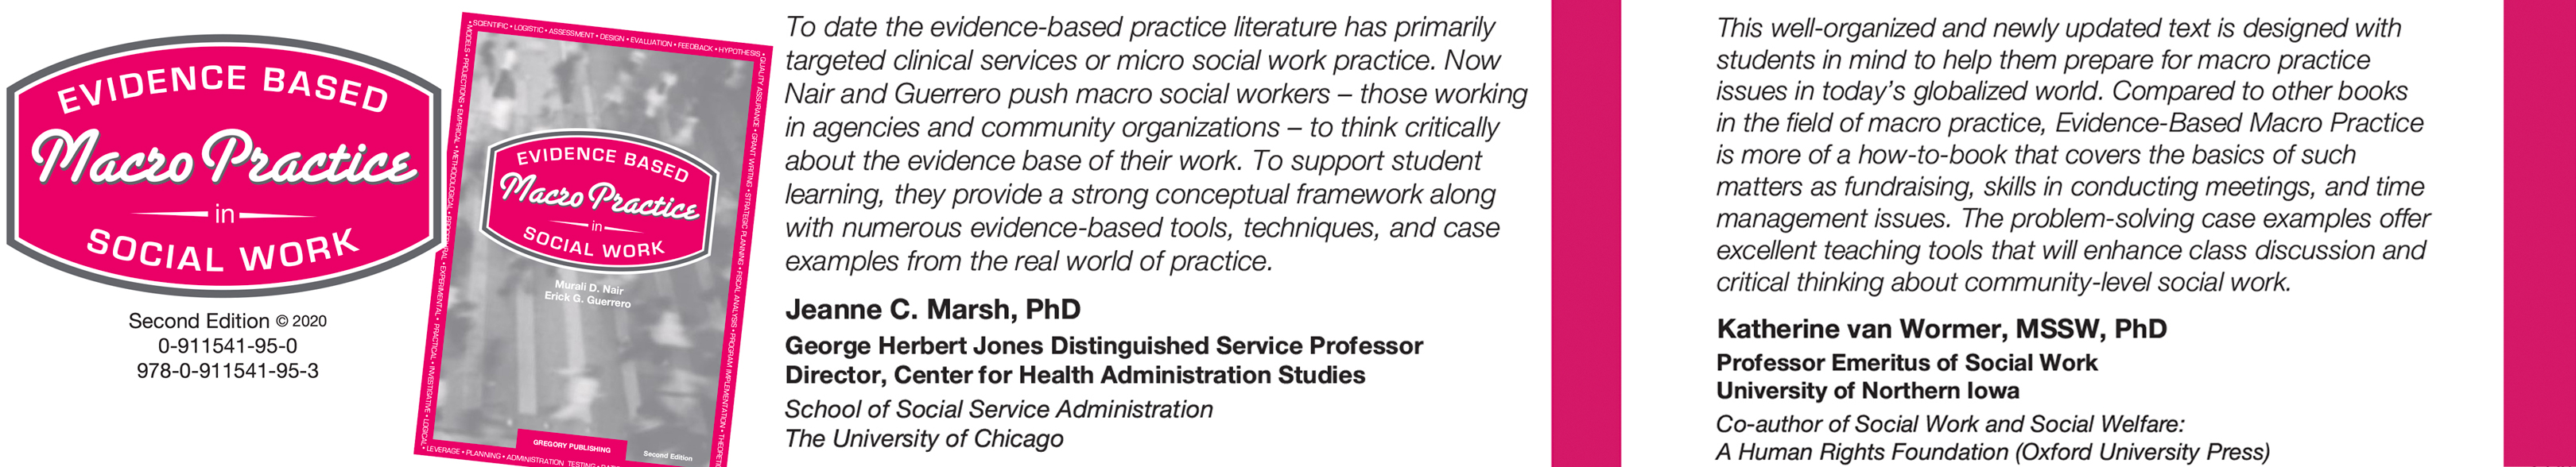 Evidence-based macro practice in social work